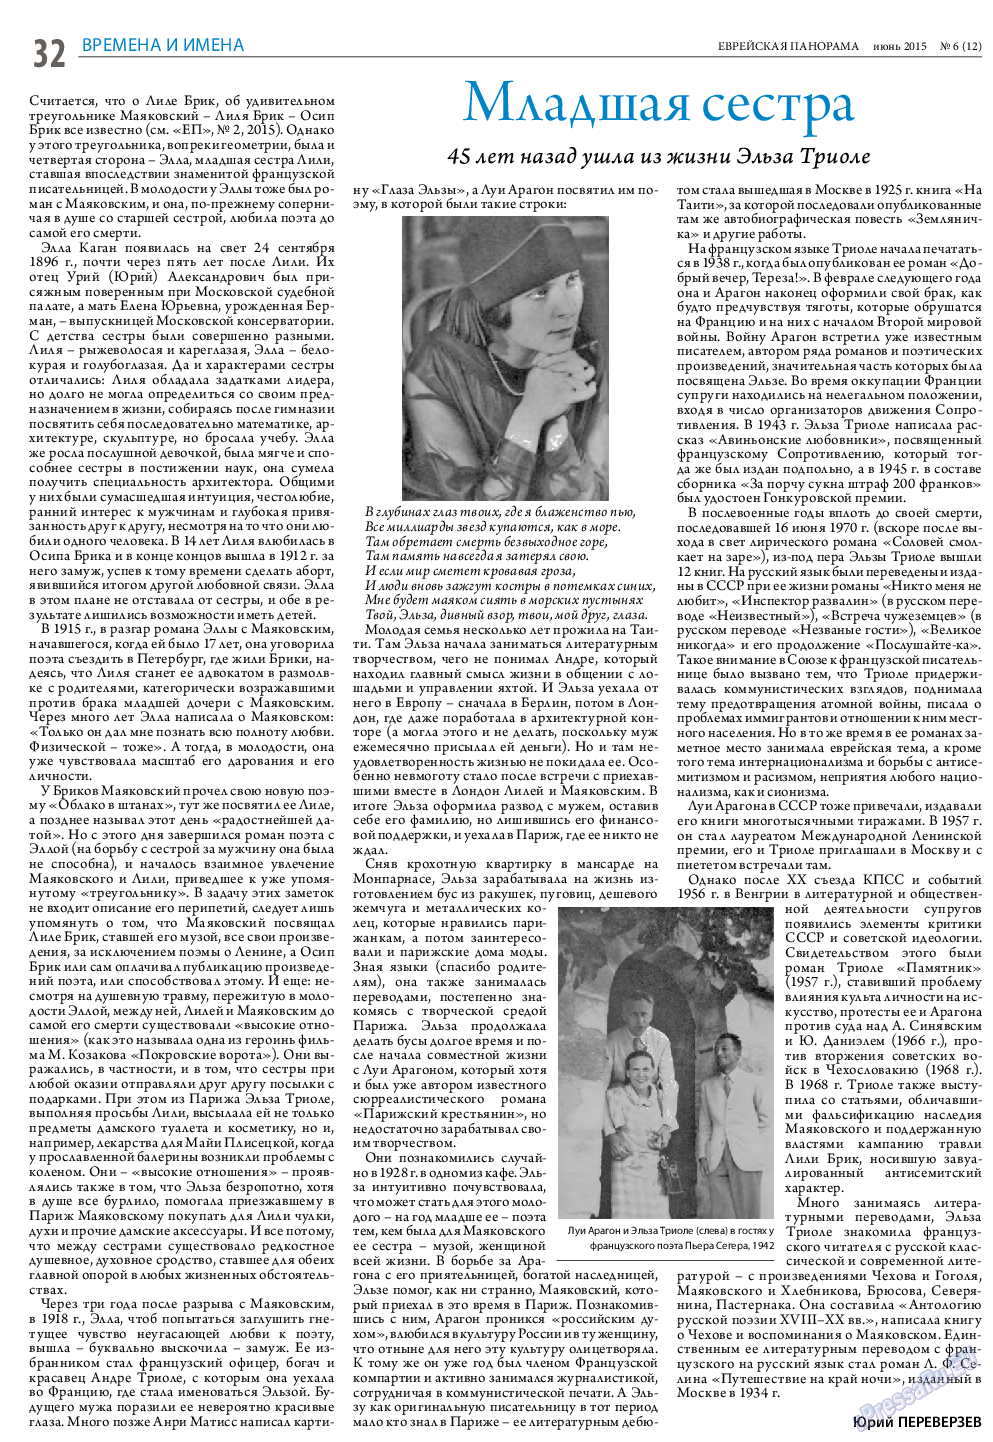 Еврейская панорама, газета. 2015 №6 стр.32